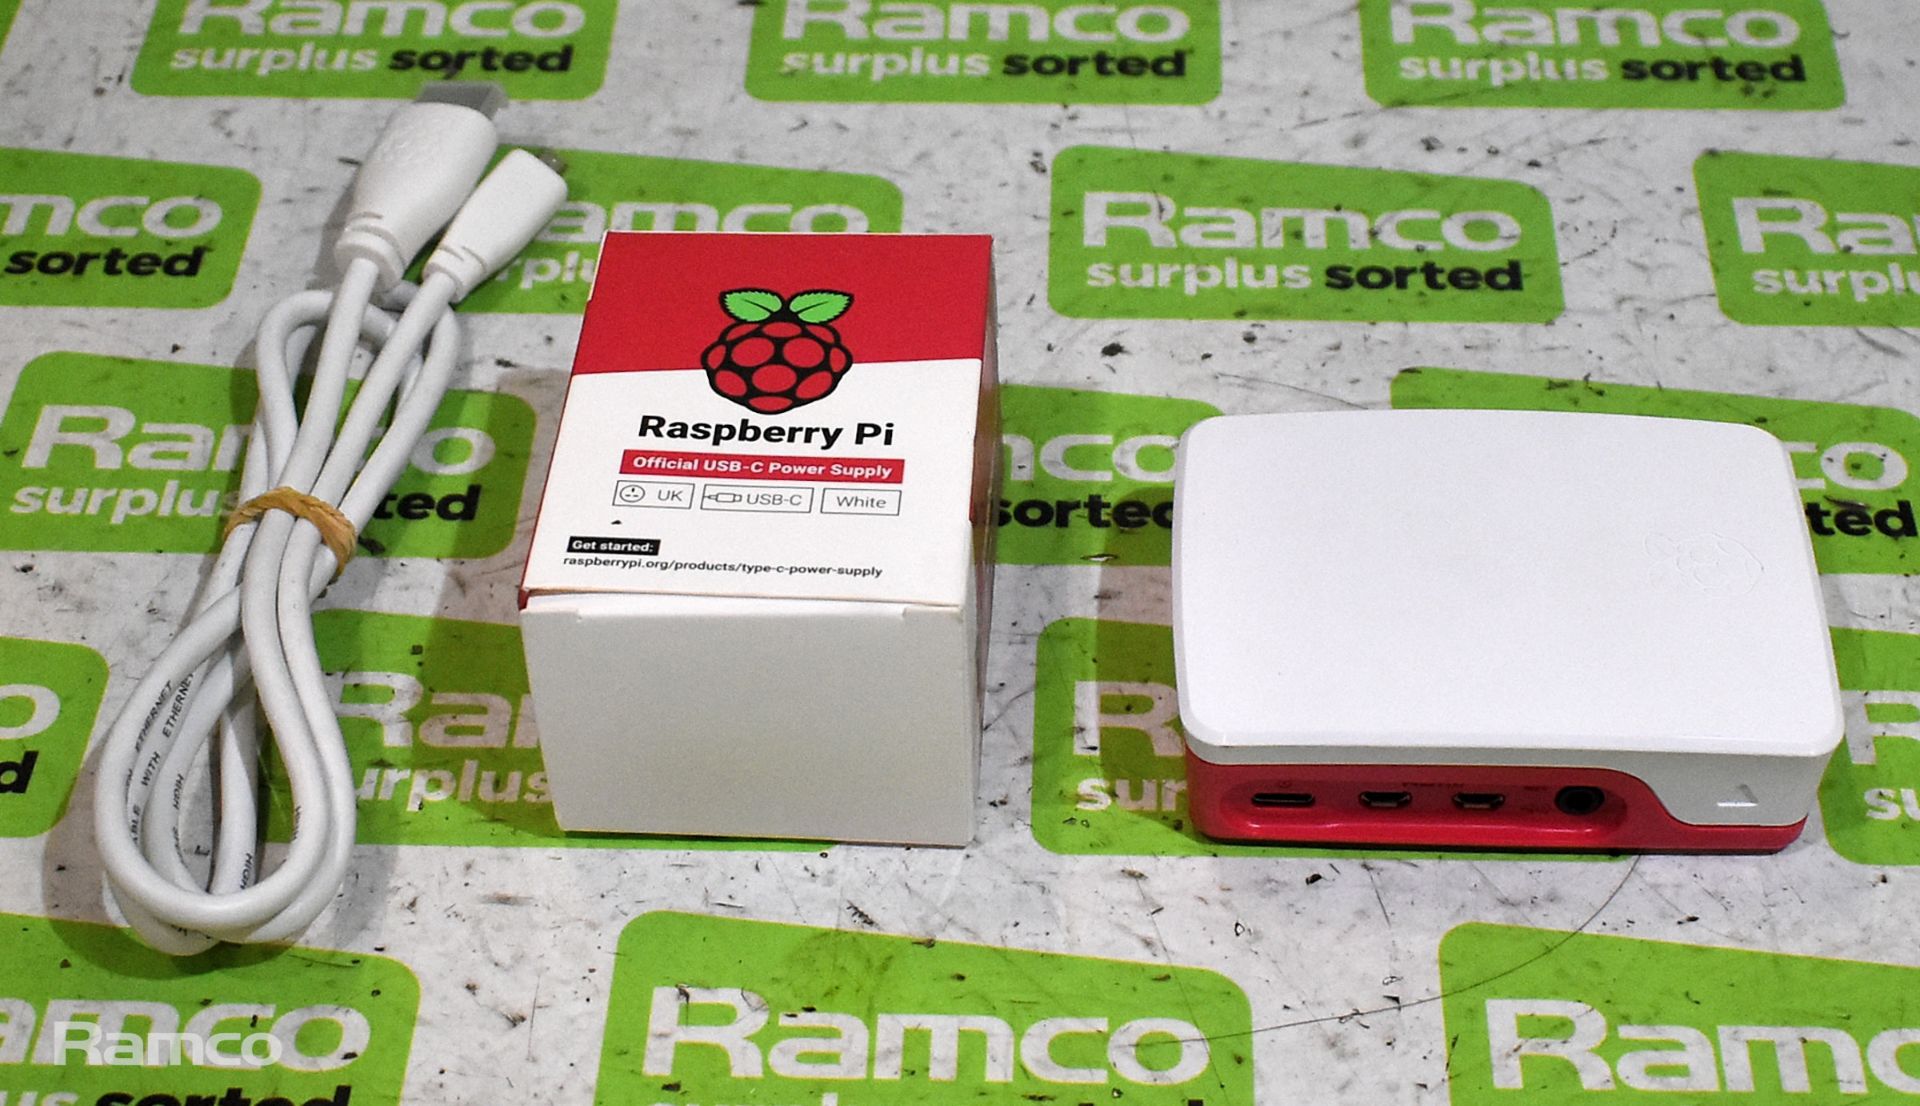 10x Raspberry Pi 4 Model B starter kits (Raspberry Pi 4, case, Micro-HDMI cable, USB-C power supply) - Image 2 of 3